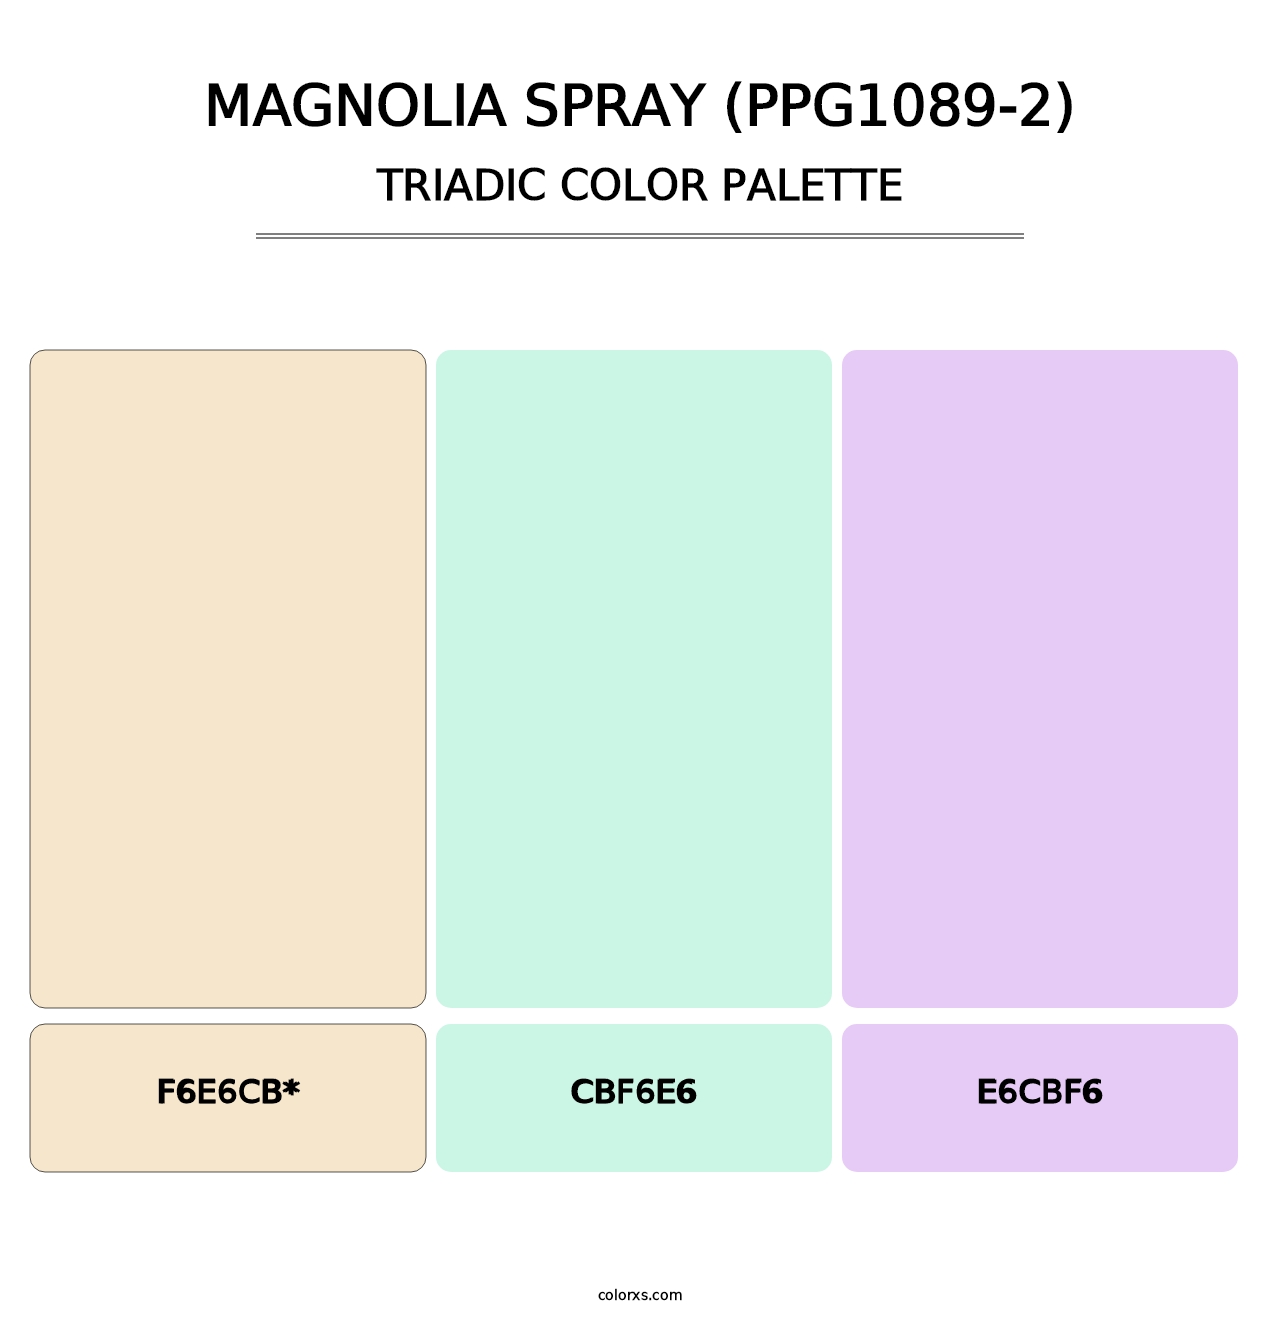 Magnolia Spray (PPG1089-2) - Triadic Color Palette